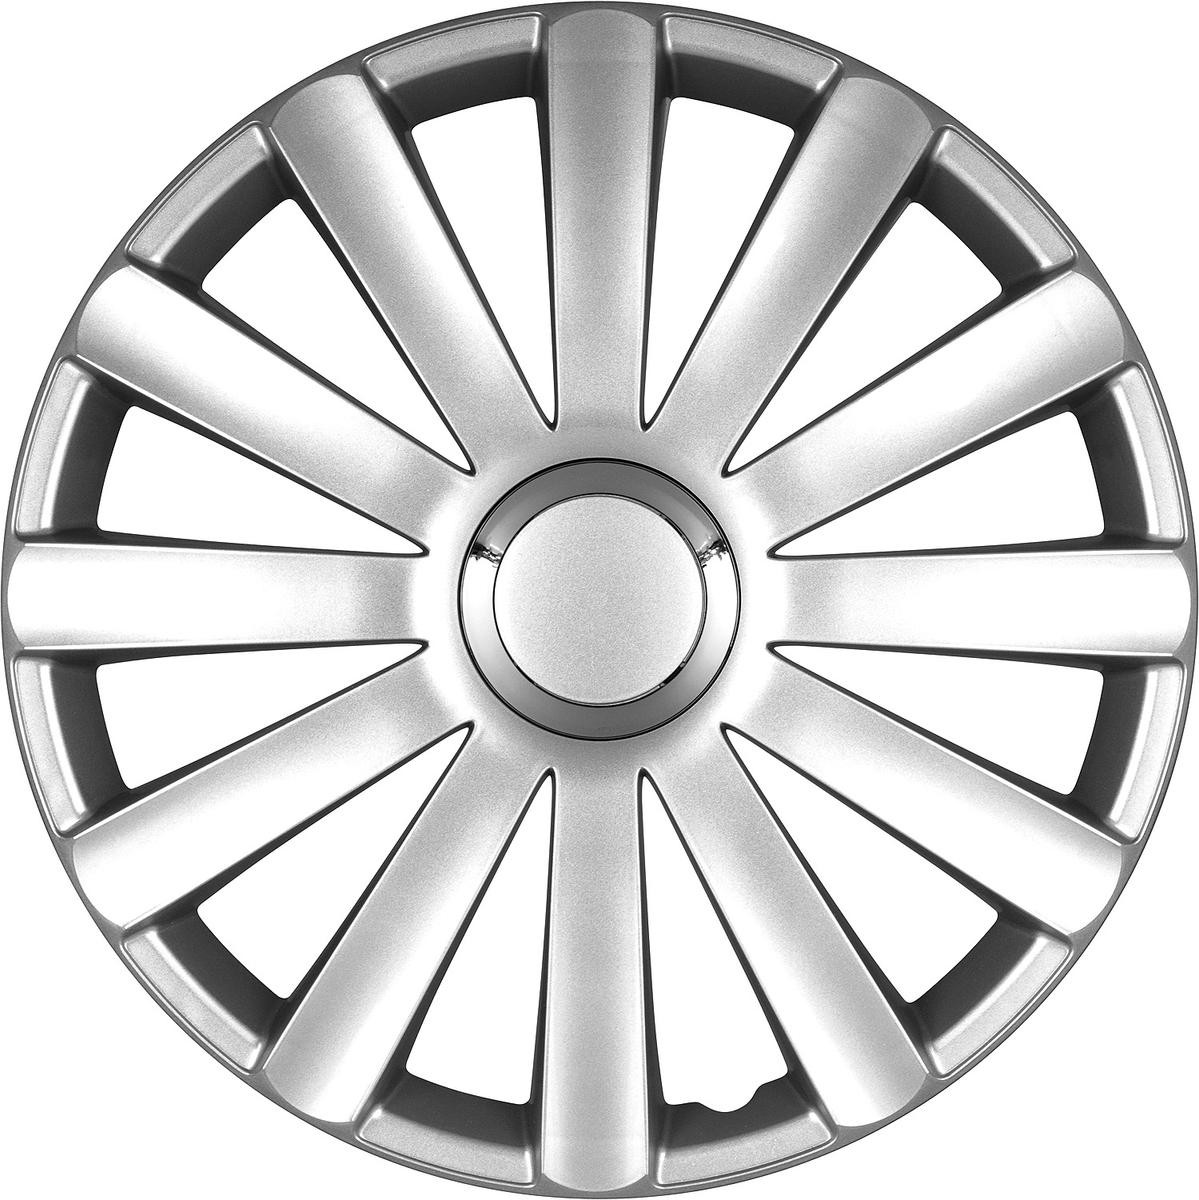 ARGO 14SPYDERPRO Car wheel trims VW Golf 4 (1J1) 14 Inch silver